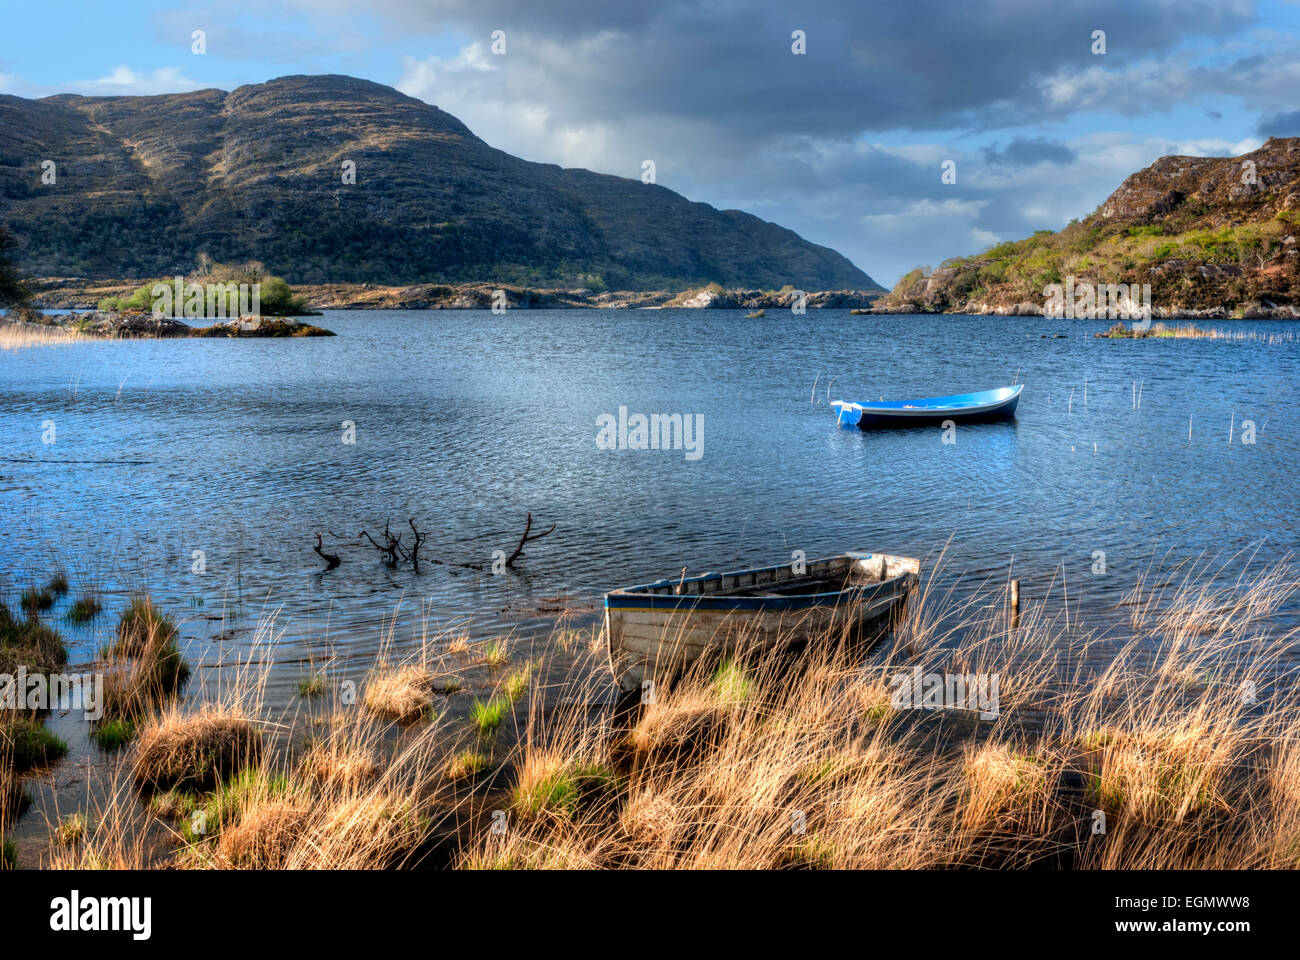 Boats on lake in Killarney National Park, Republic of Ireland, Europe Stock Photo